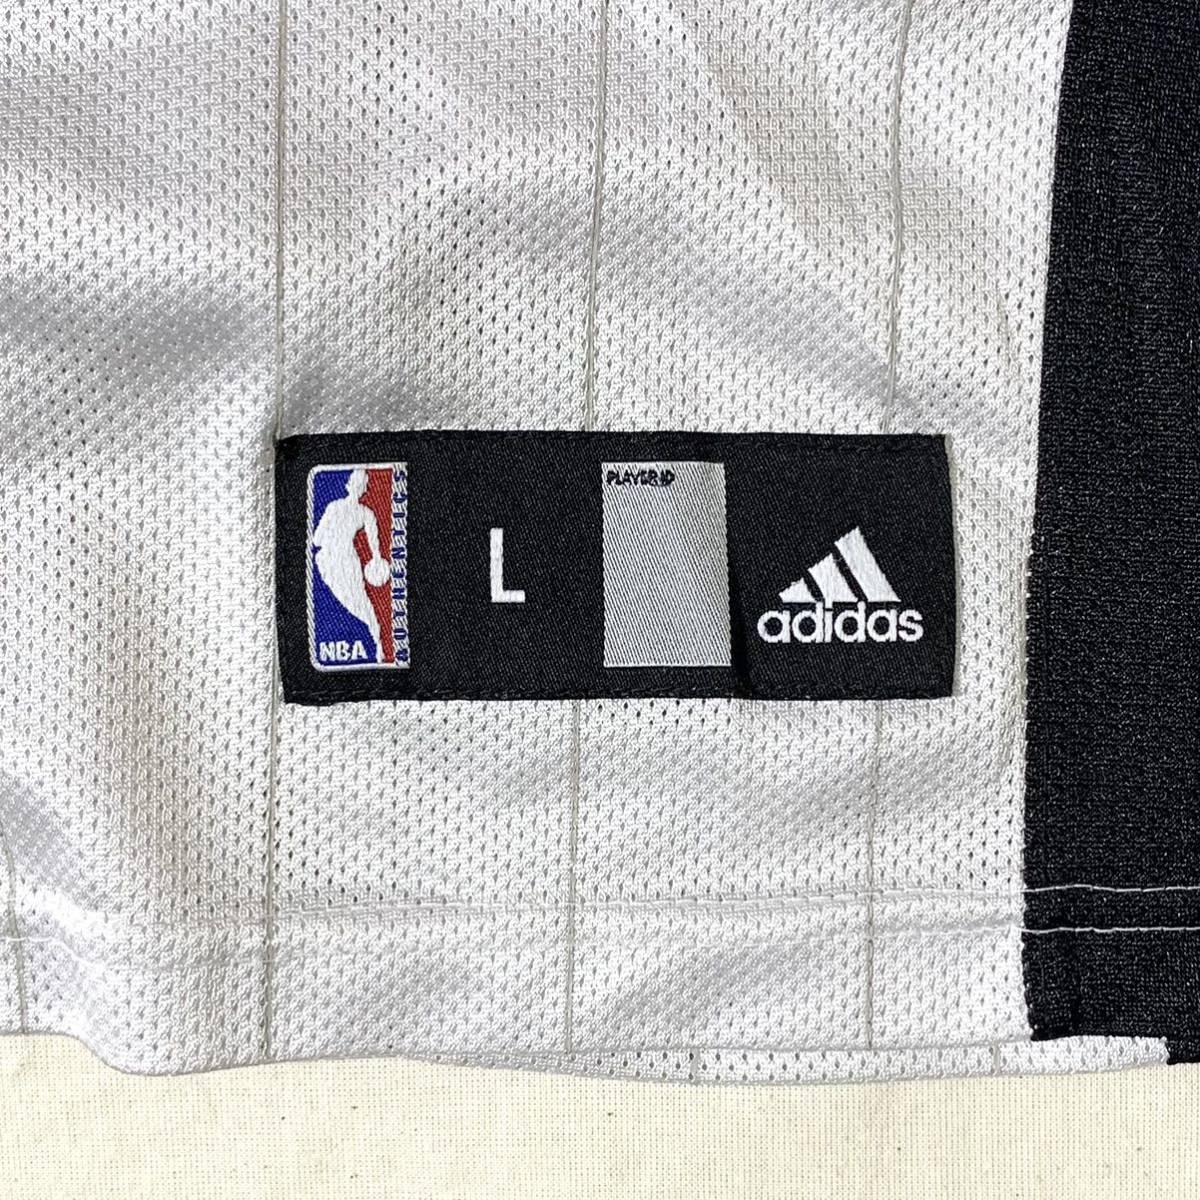 Adidas/NBA Magic(USA)バスケットボールシャツ_画像5